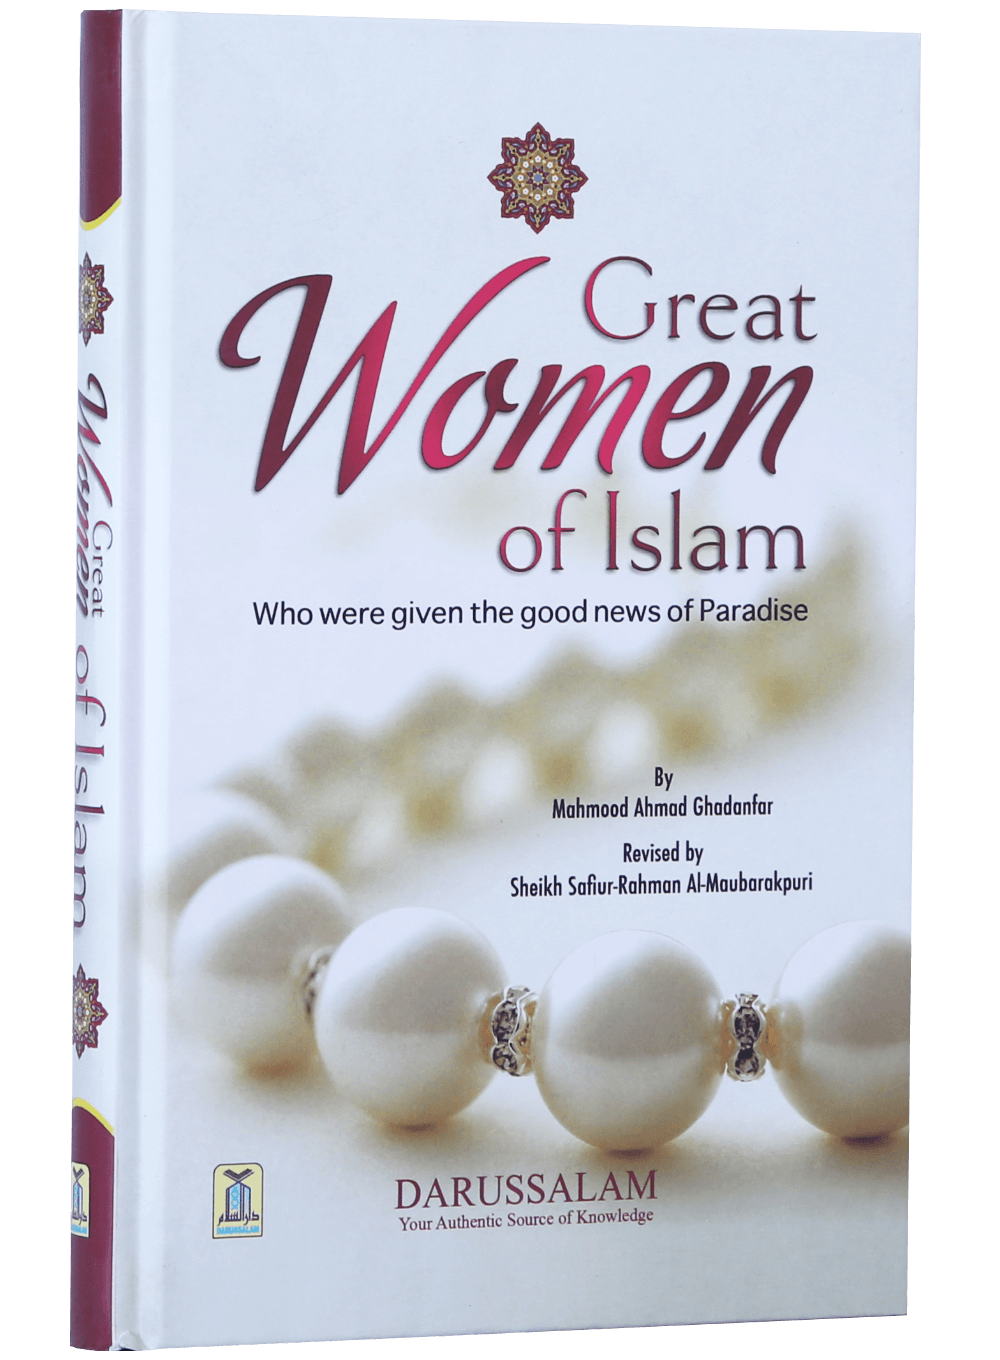 darussalam-2017-10-03-12-28-13great-women-of-islam-(2)